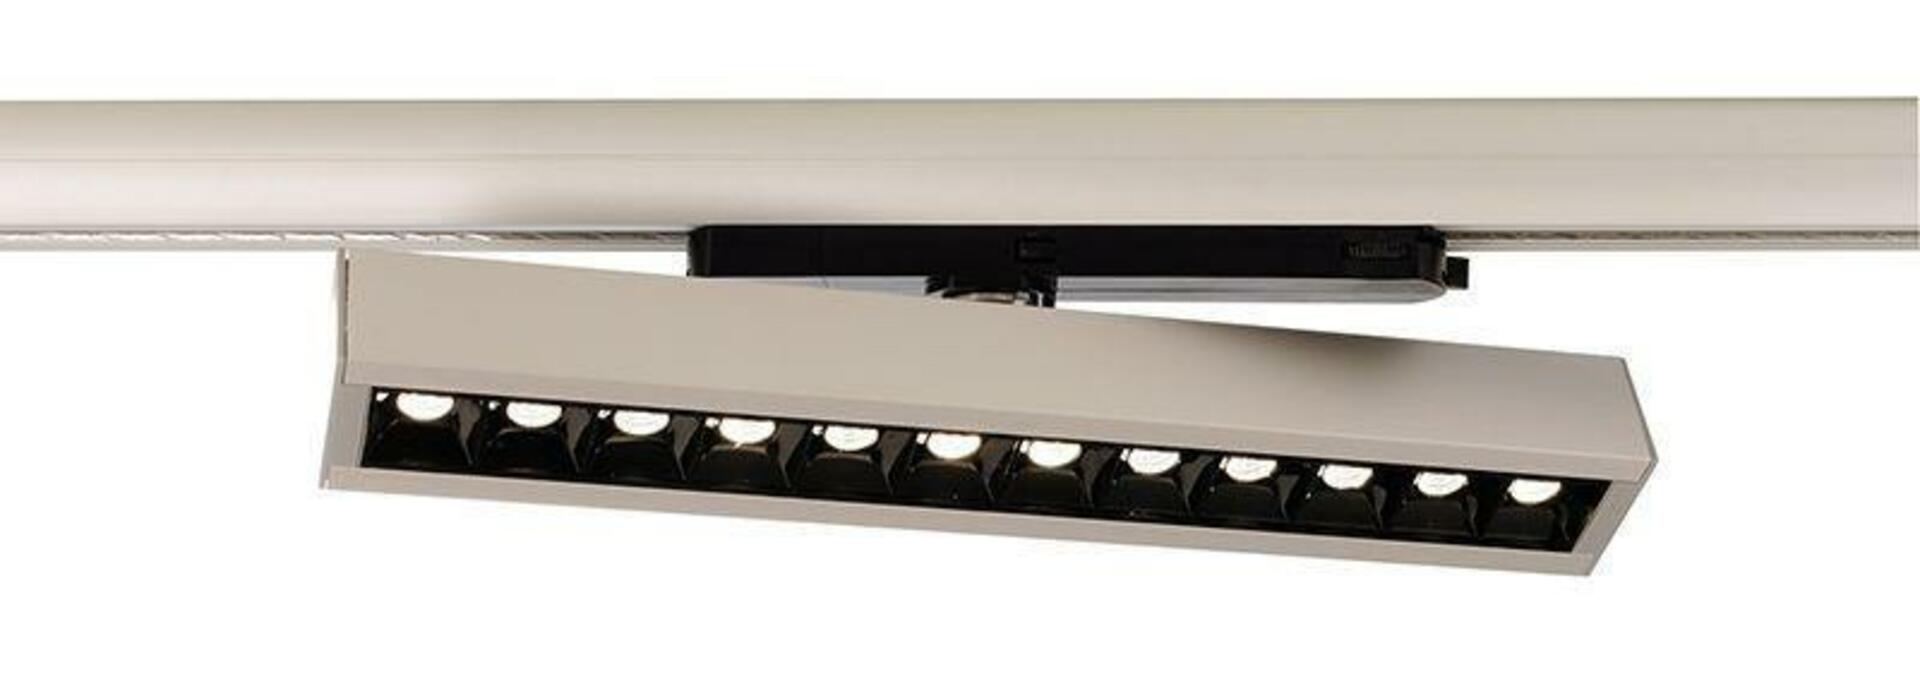 Light Impressions Deko-Light kolejnicový systém 3-fázový 230V Alnitak 25-34W, 4000K 220-240V AC/50-60Hz 34,00 W 4000 K stříbrná 336 mm 707113